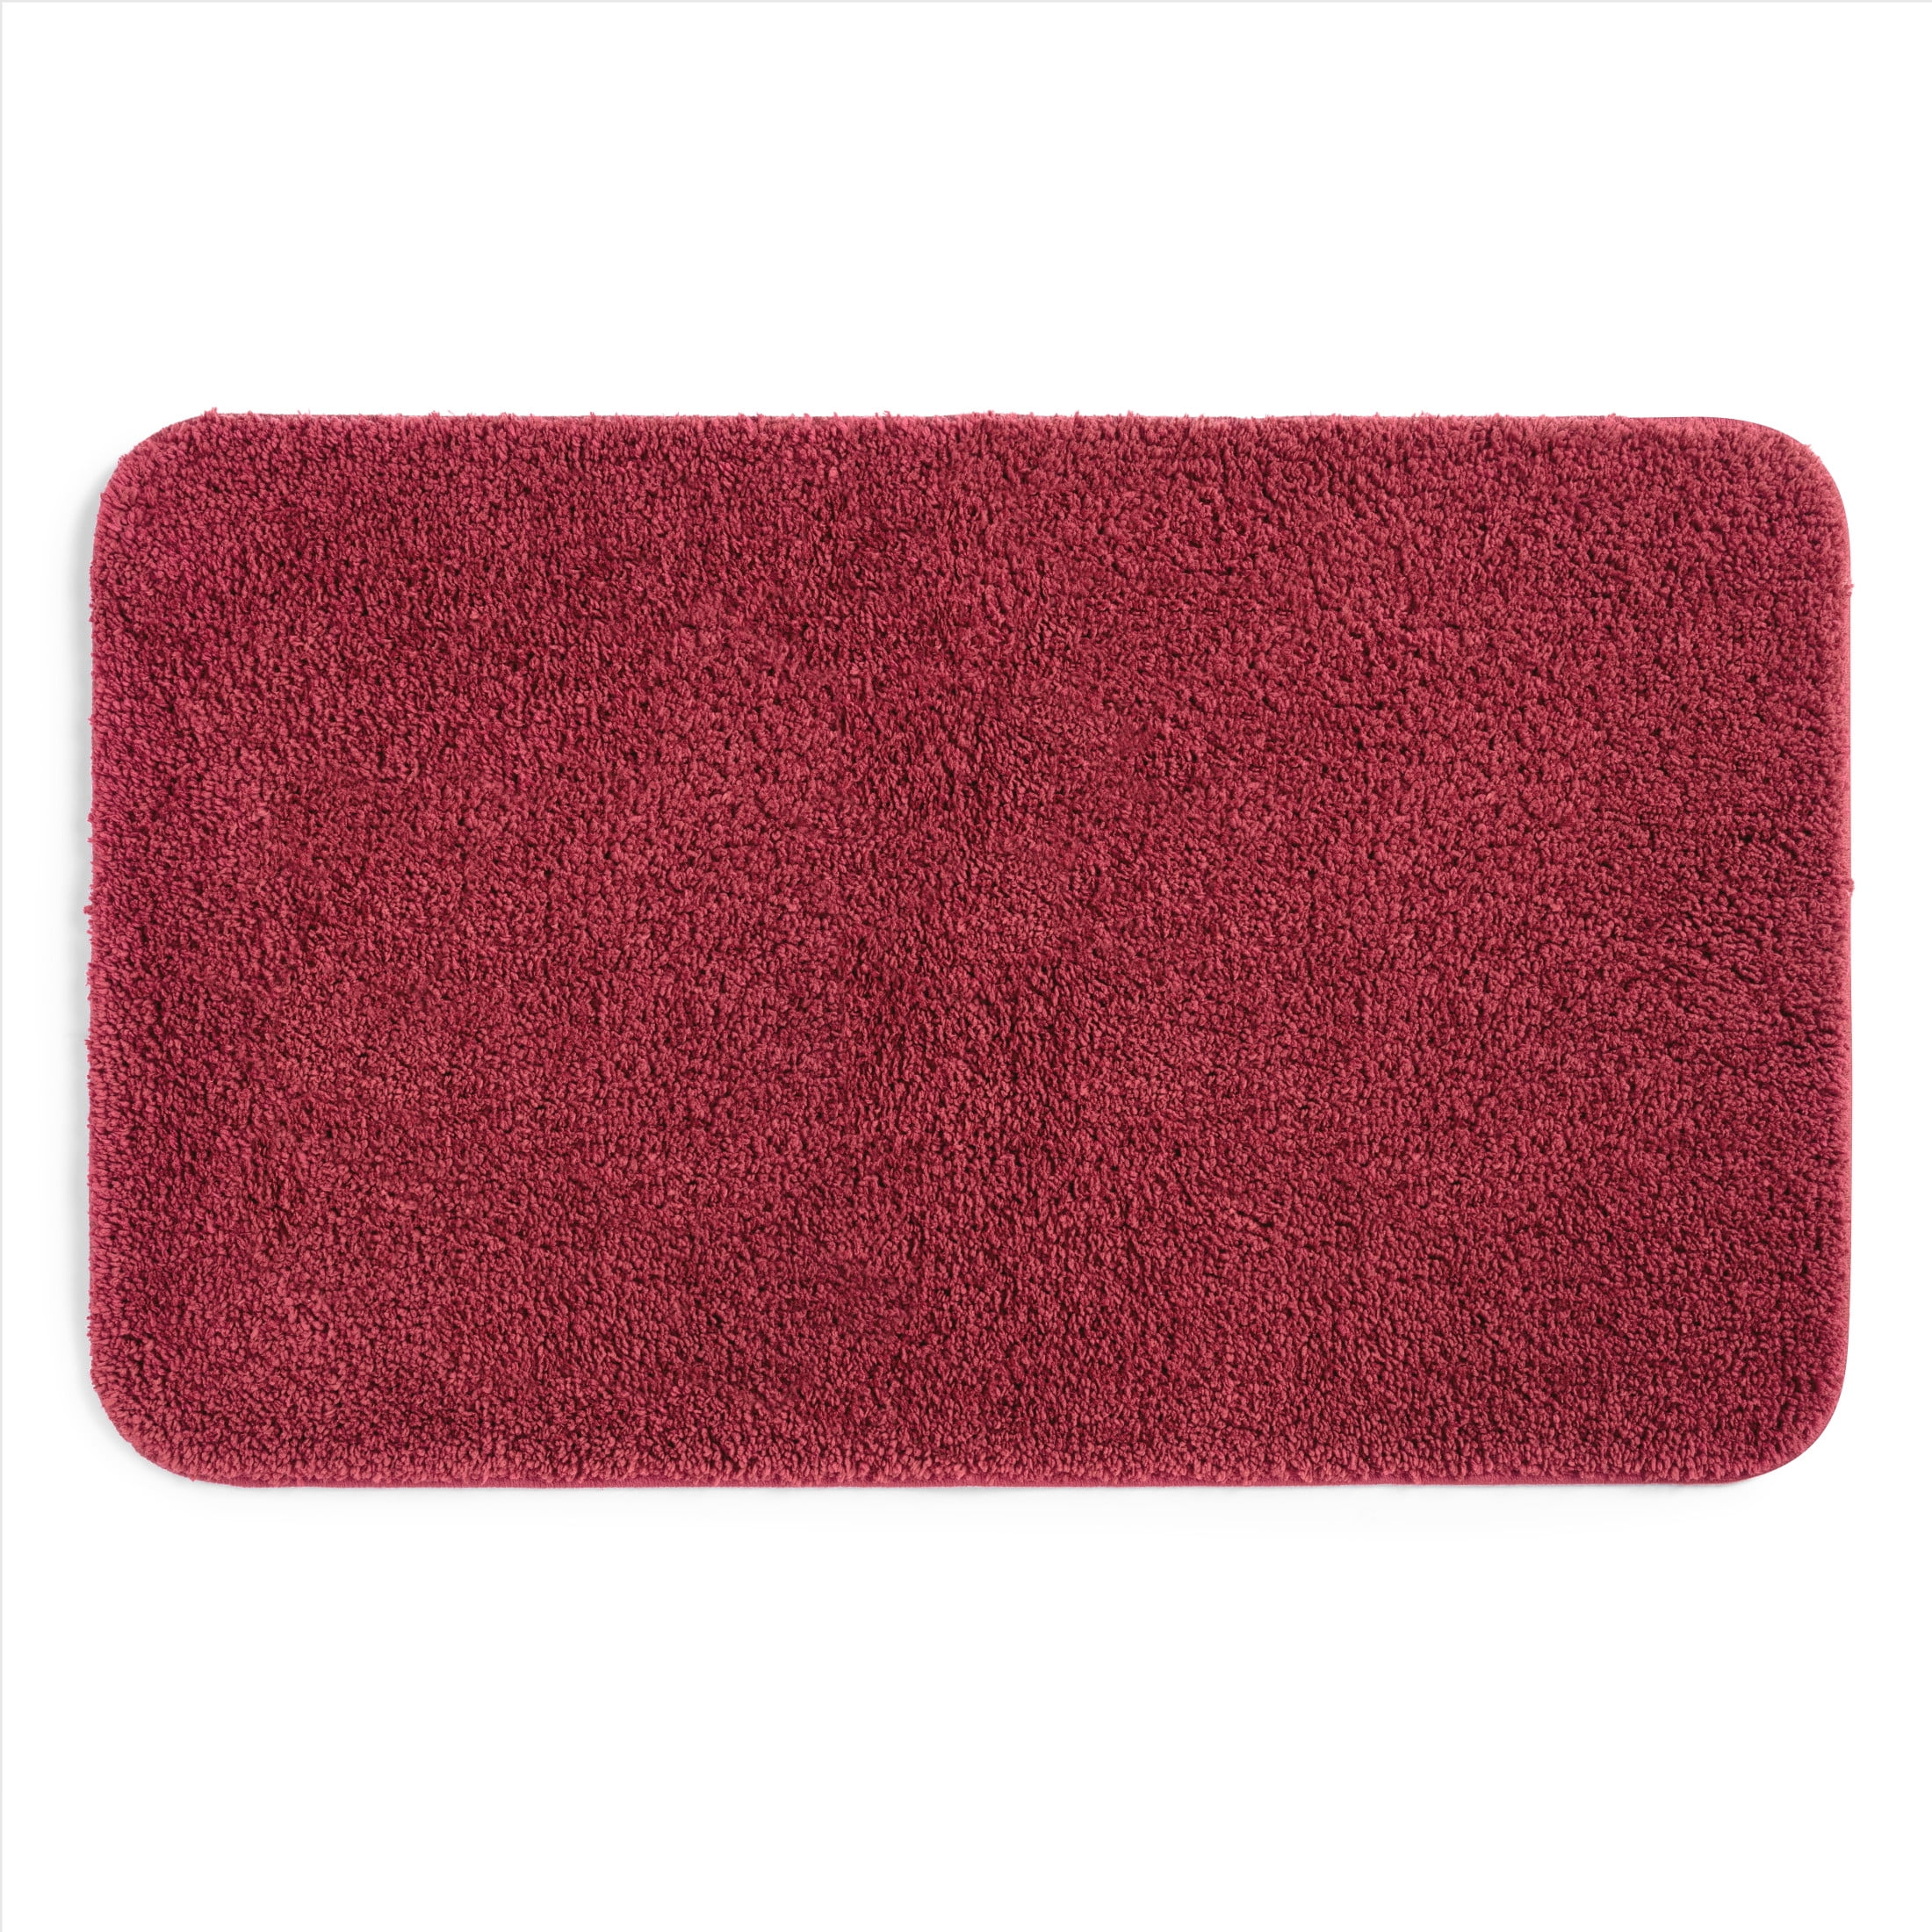 Marylee Rectangle 100% Cotton Reversible 2 Piece Bath Rug Set Red Barrel Studio Color: Ivory